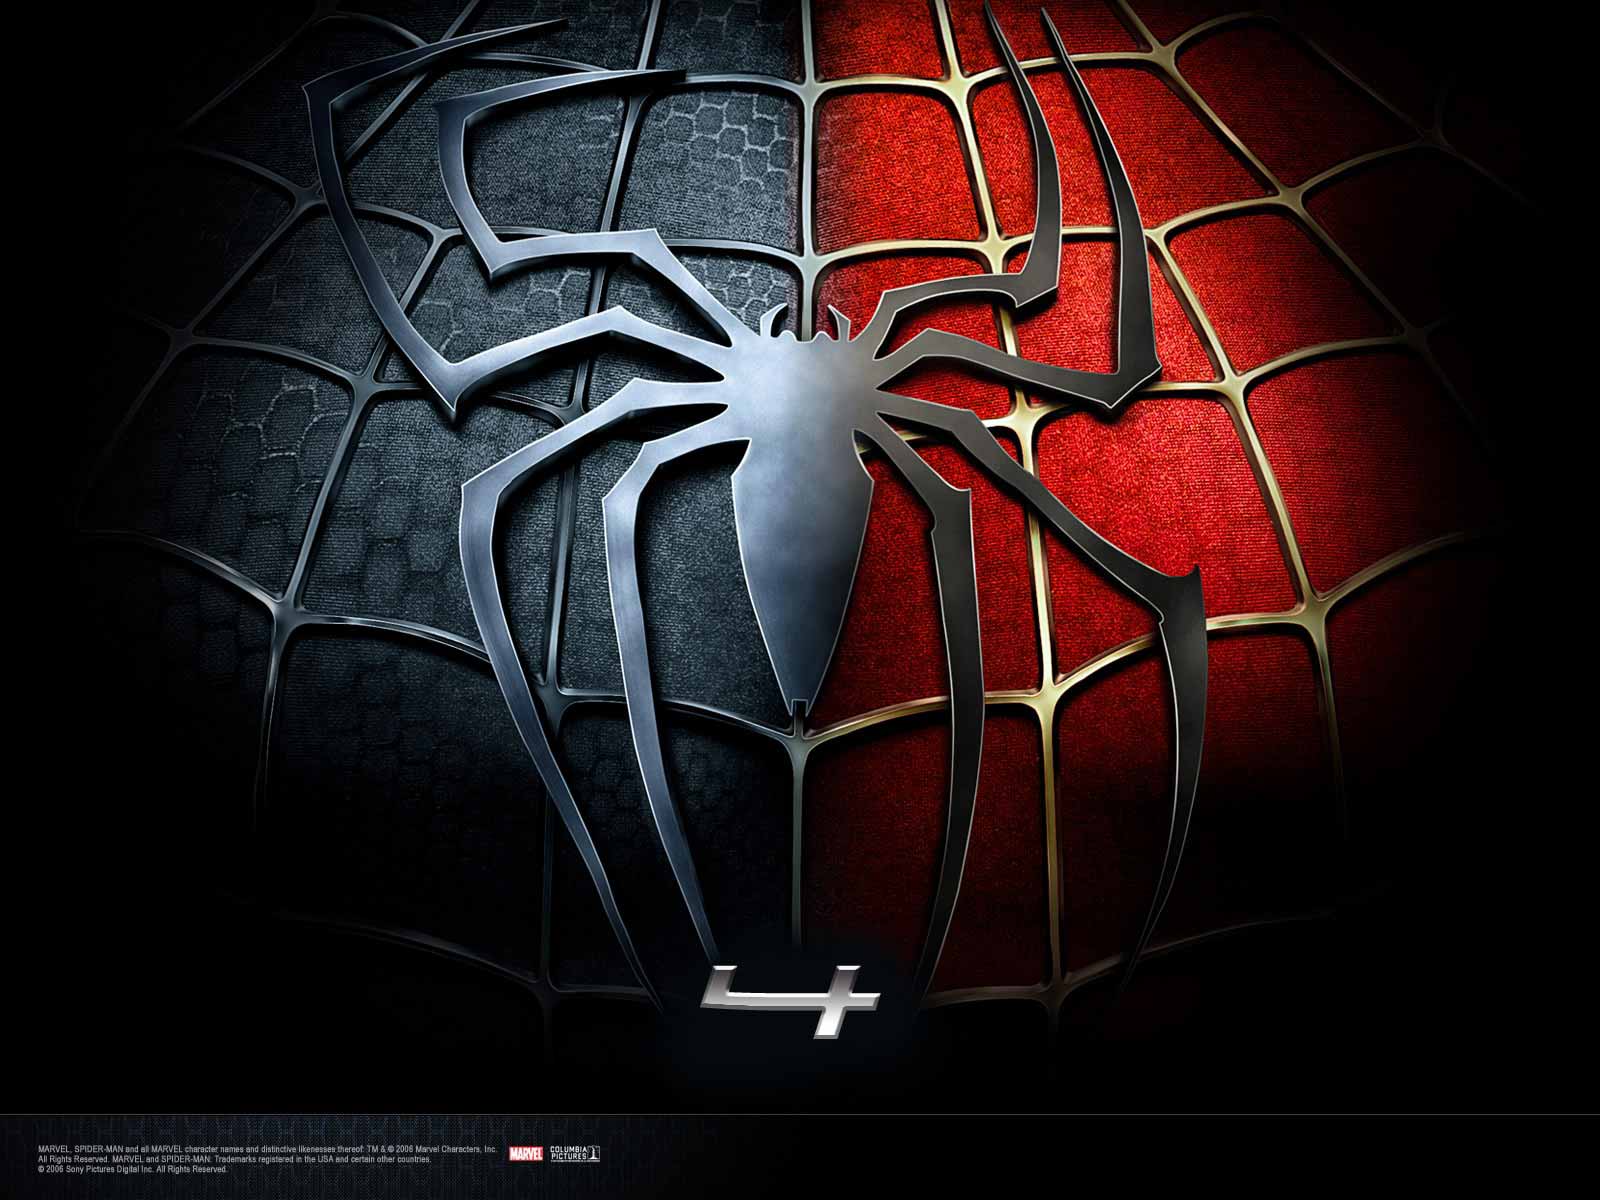 Spider Man 4 Movie Wallpaper Sentral Wallpaper HD Wallpapers Download Free Map Images Wallpaper [wallpaper376.blogspot.com]